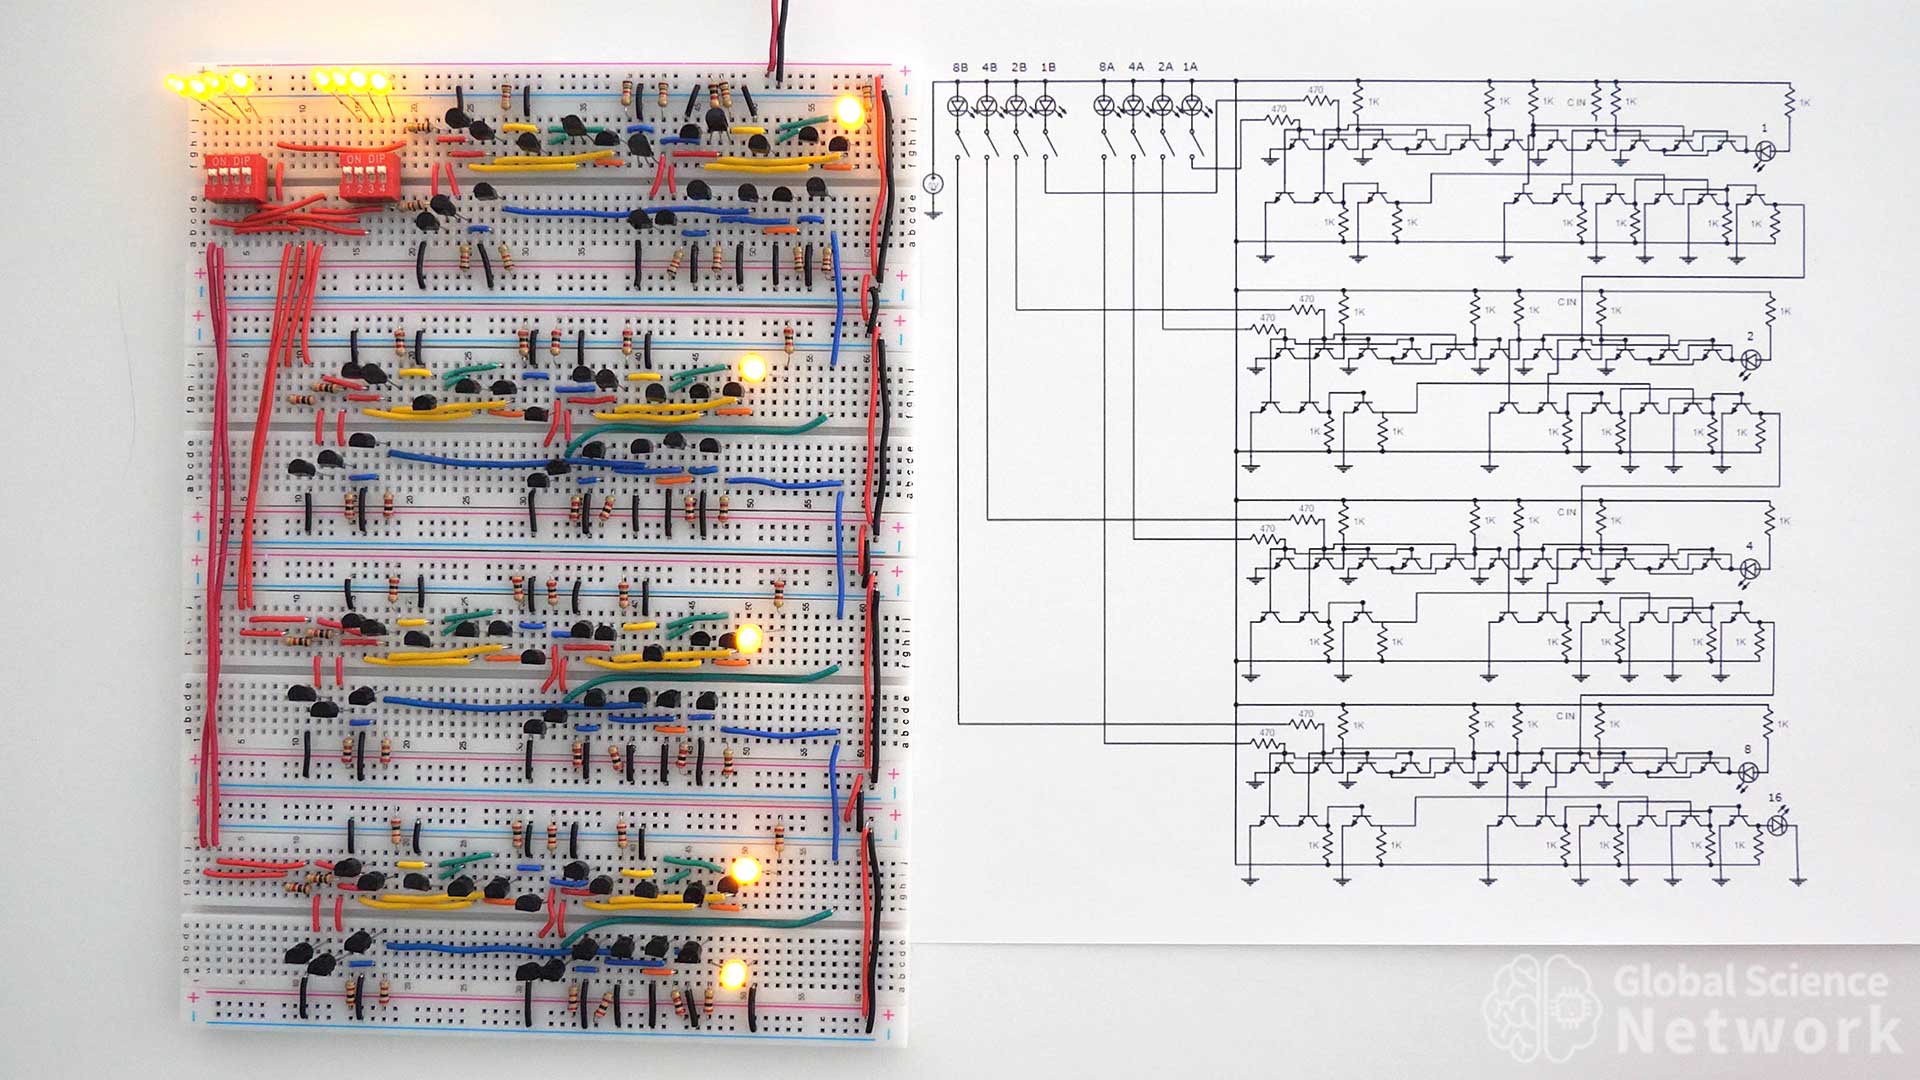 4 bit calculator built using transistor logic gates